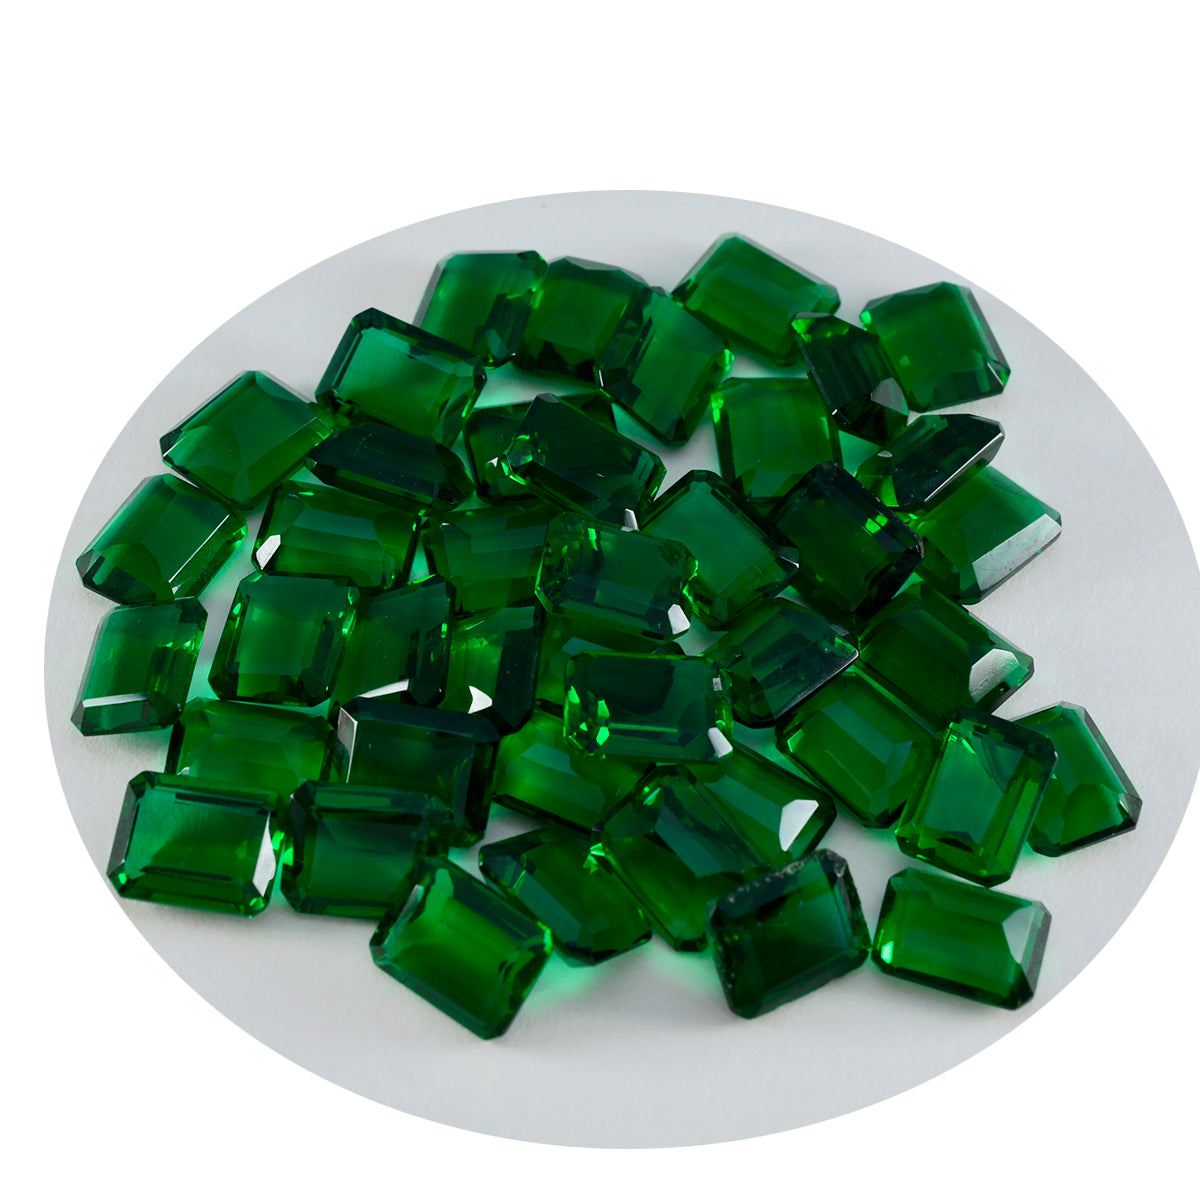 Riyogems 1PC Green Emerald CZ Faceted 5x7 mm Octagon Shape Good Quality Loose Stone